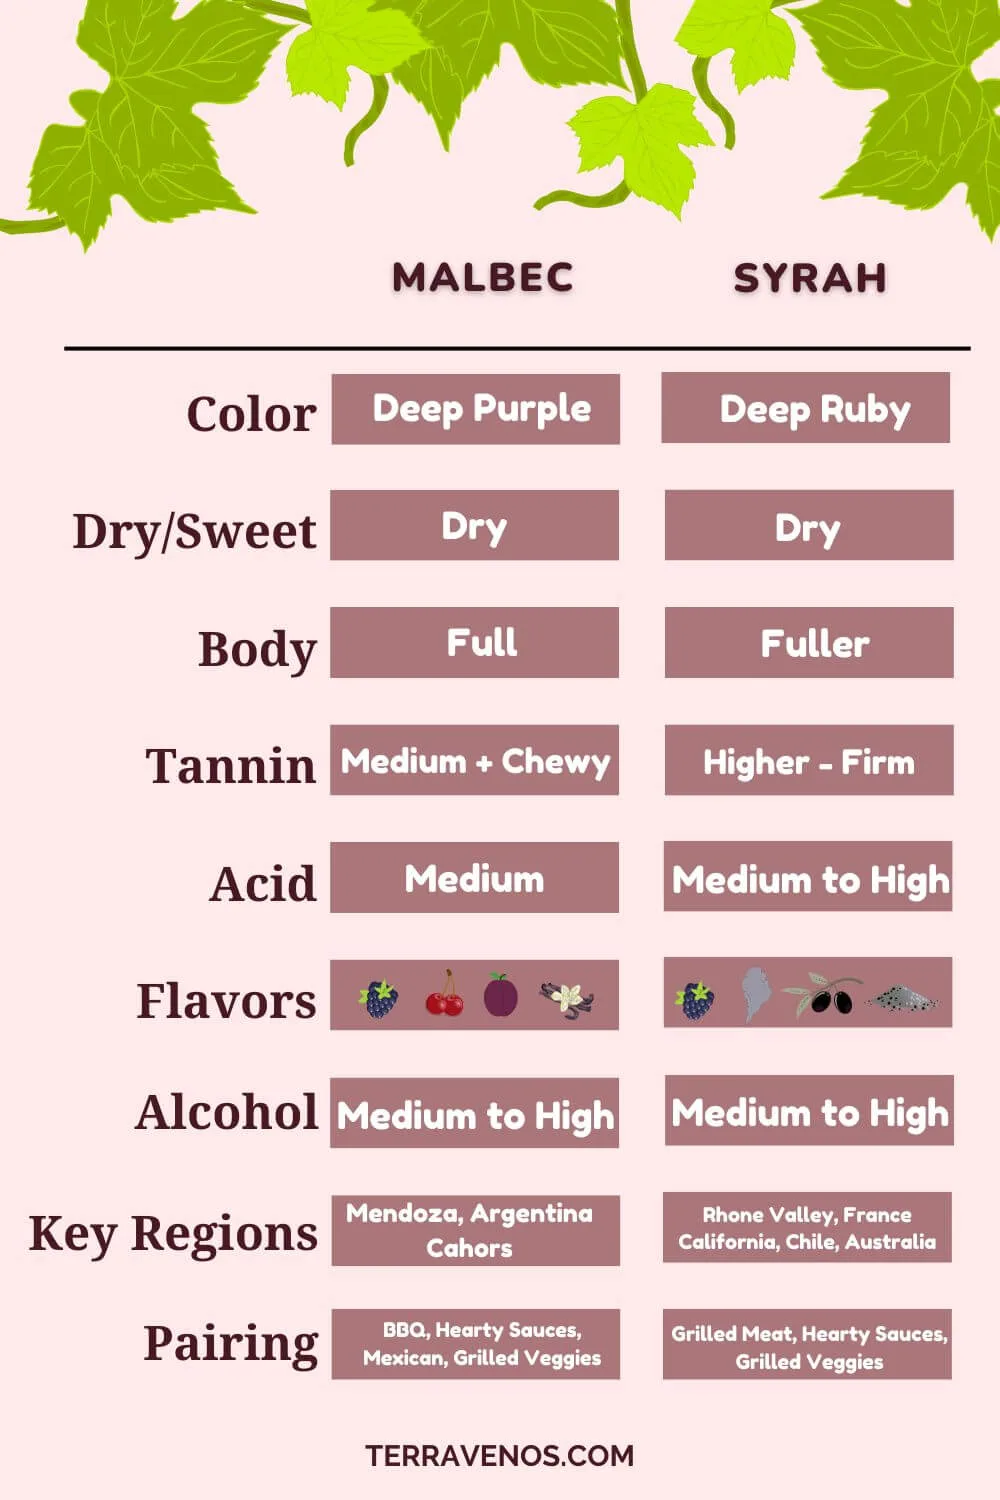 syrah versus malbec infographic